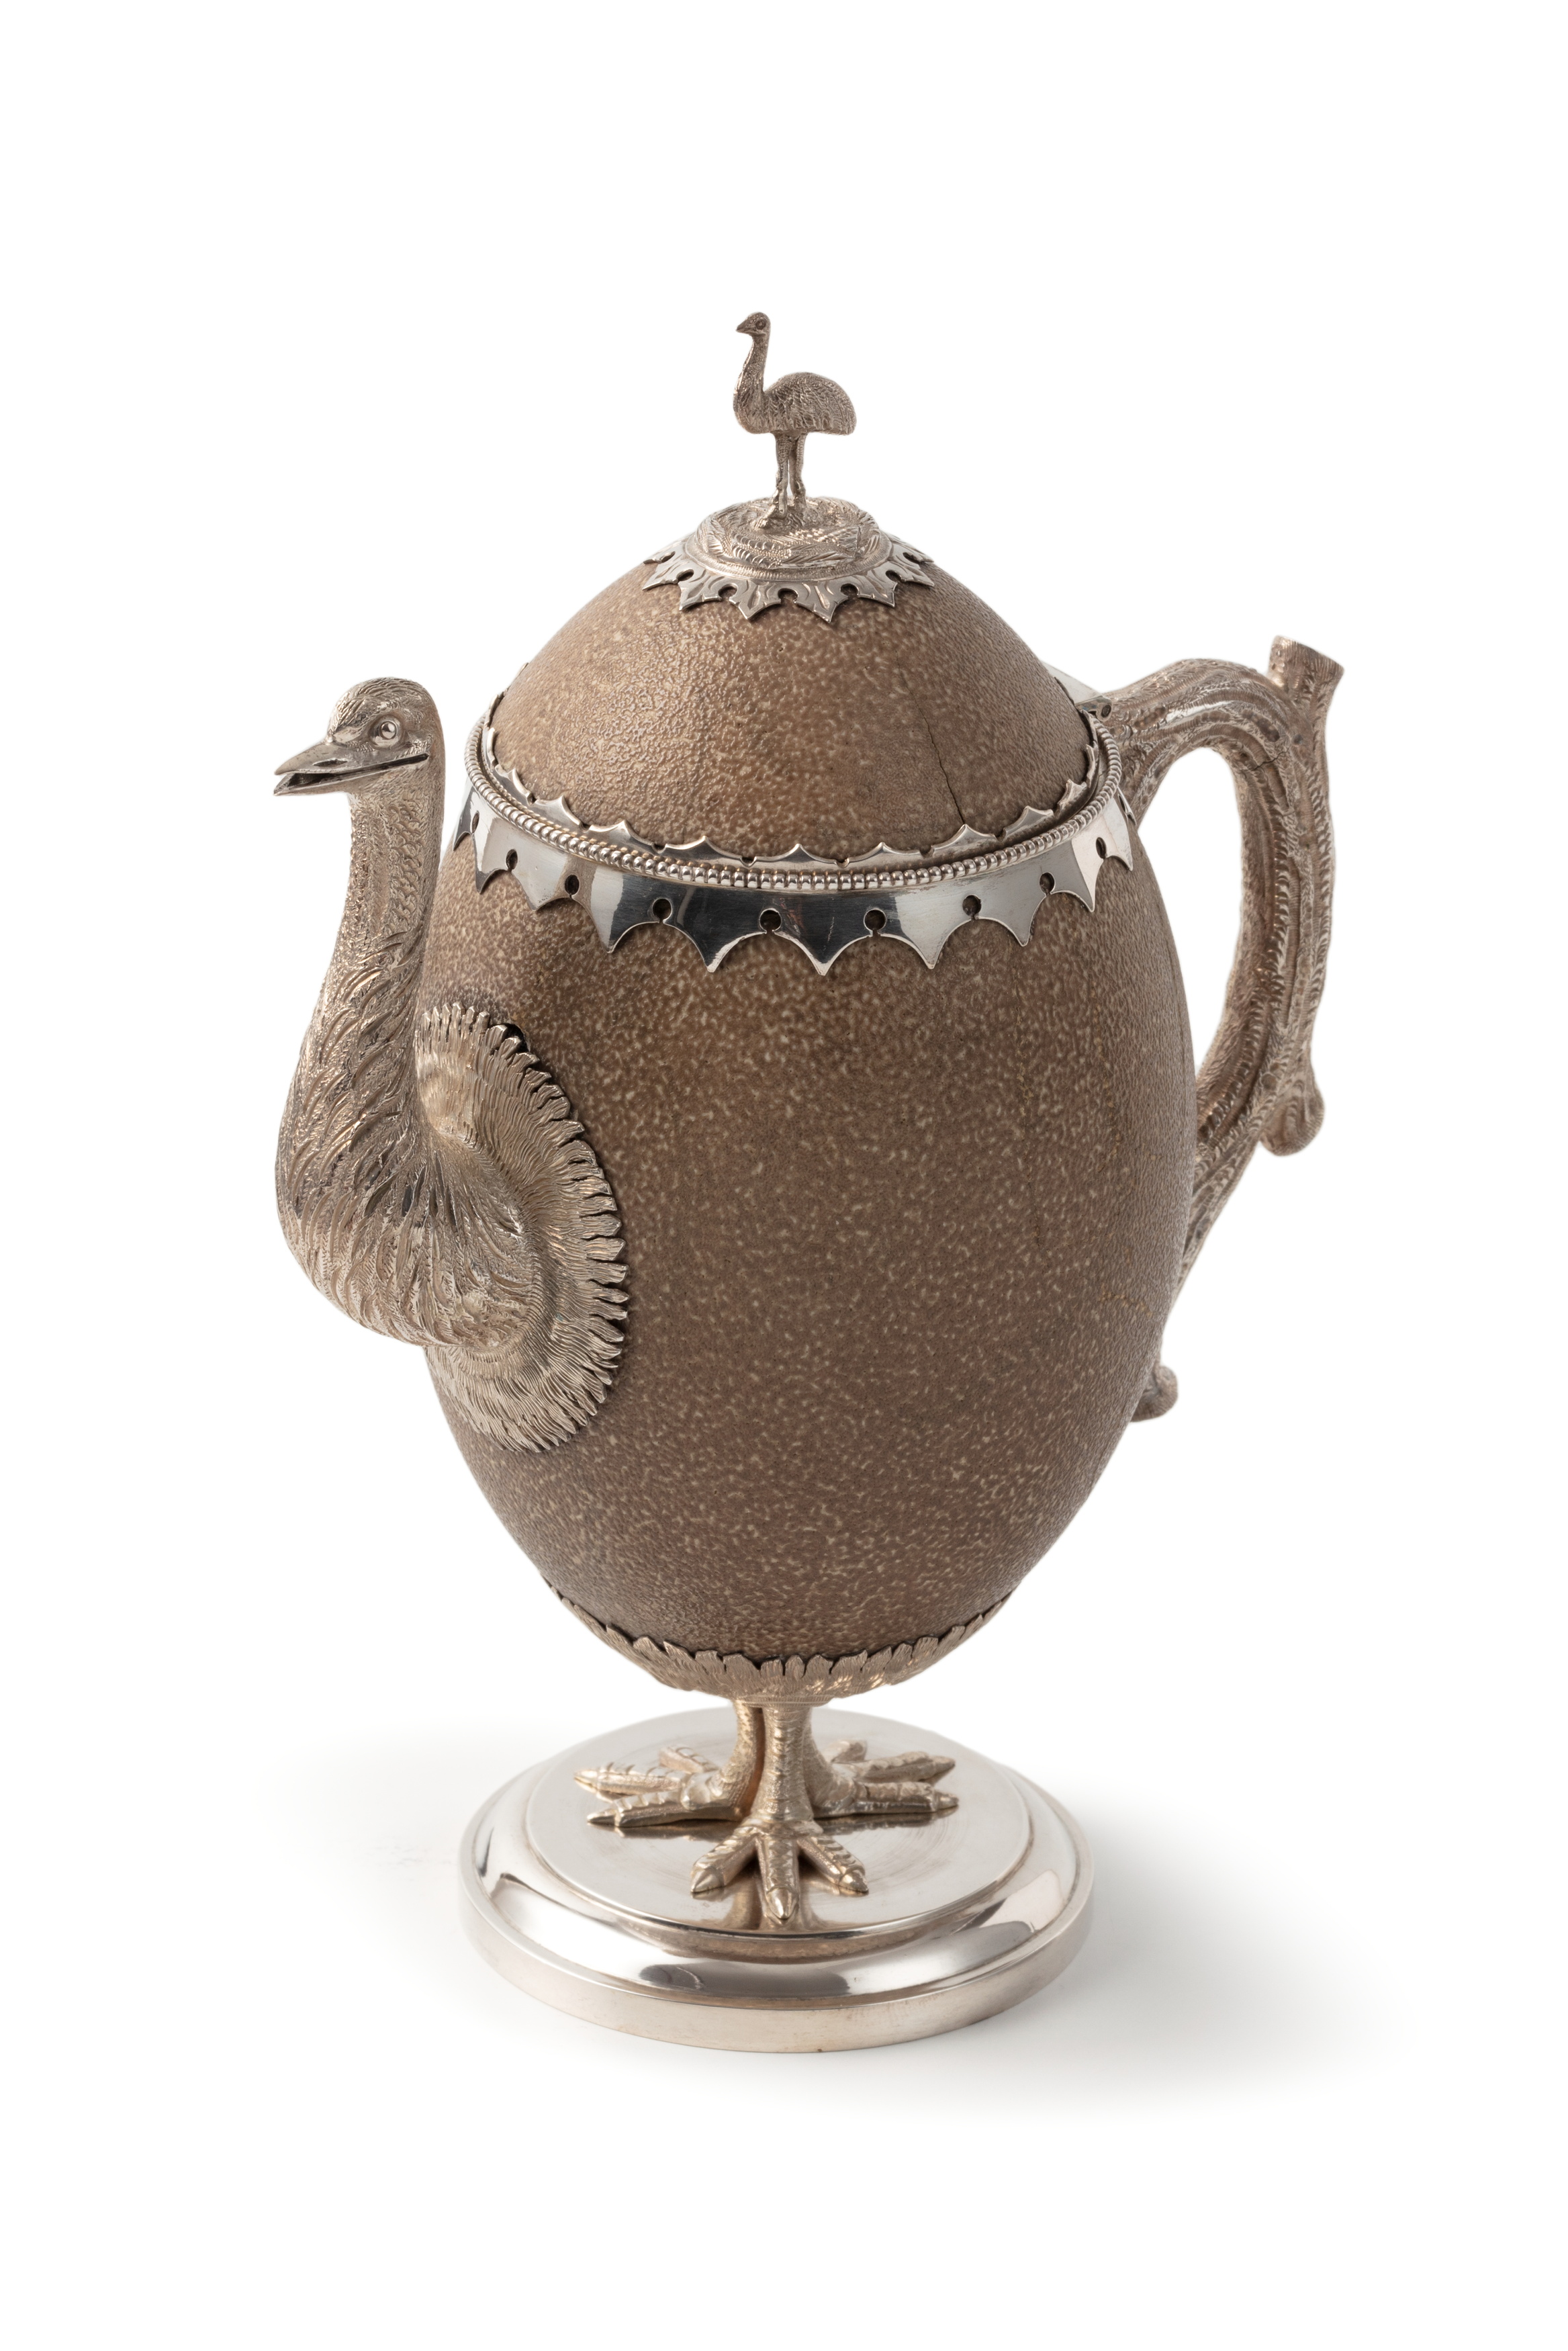 Emu egg teapot by Evan Jones